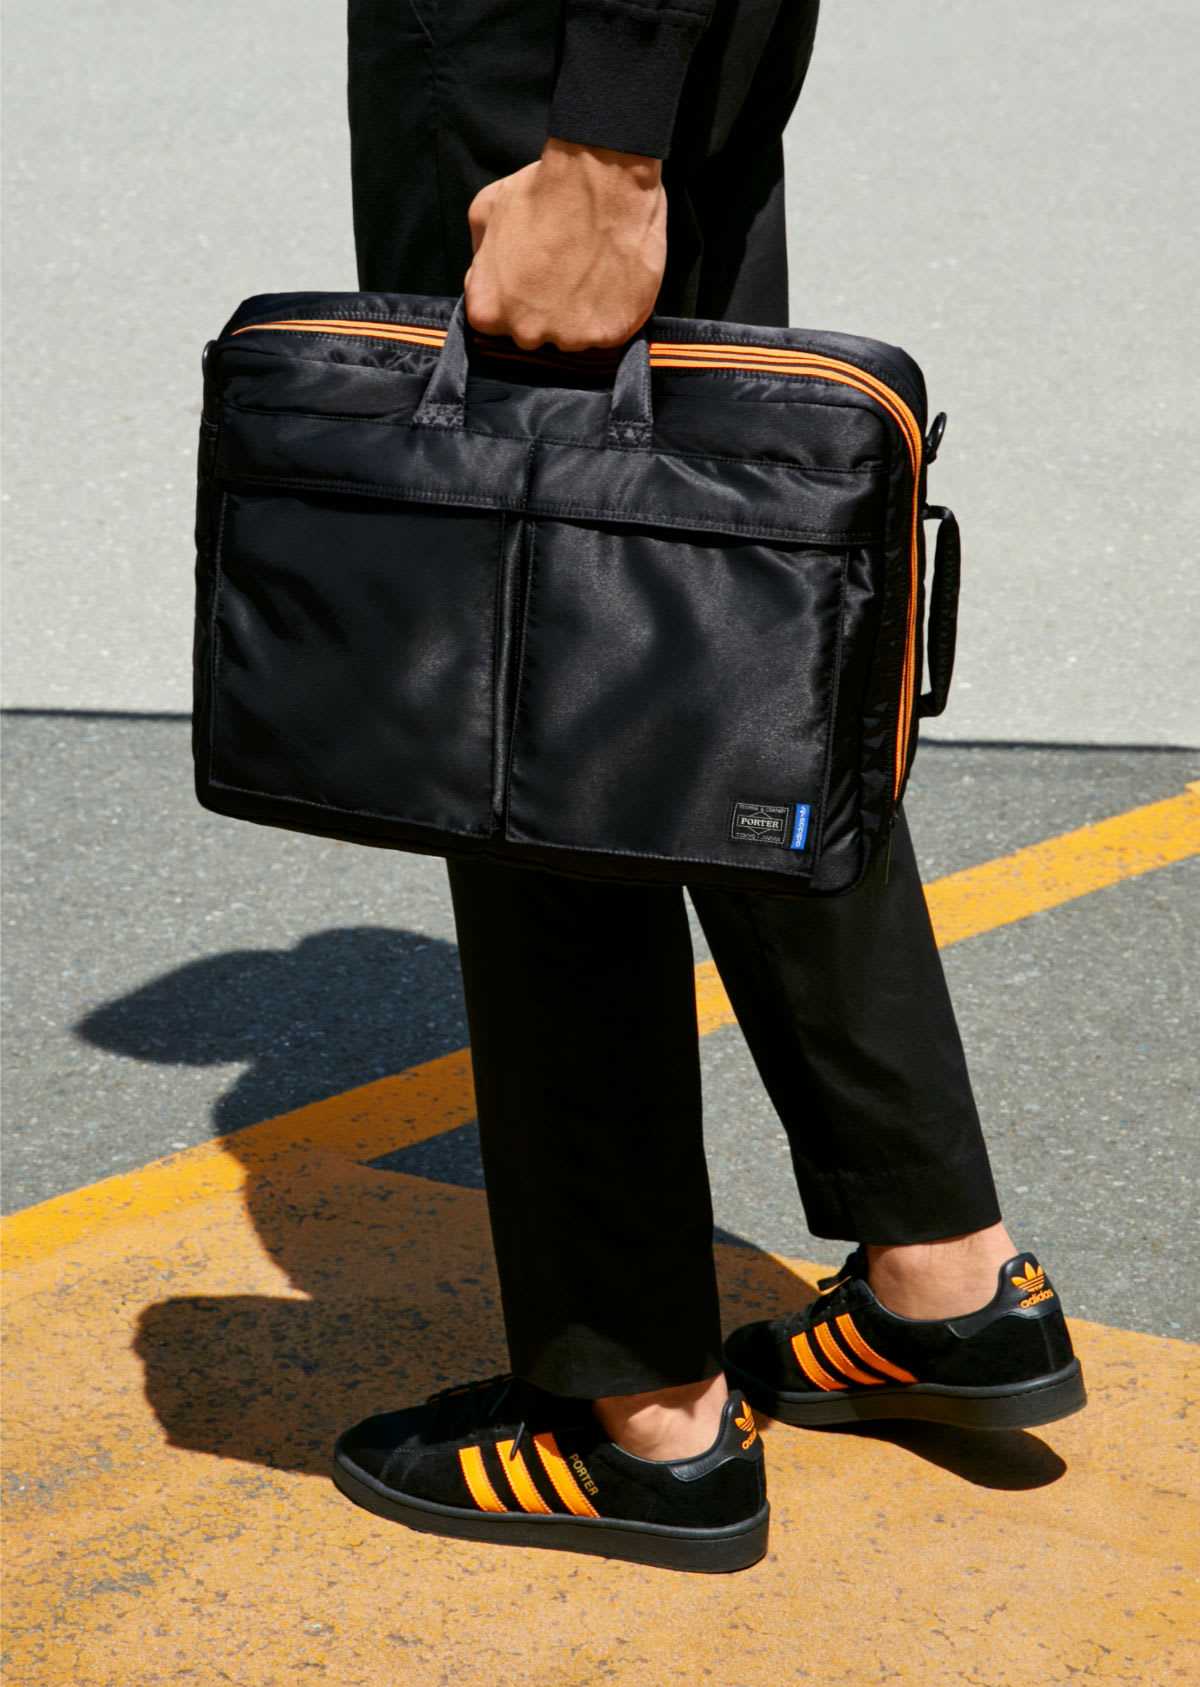 Porter x Adidas Briefcase Bag Release Date